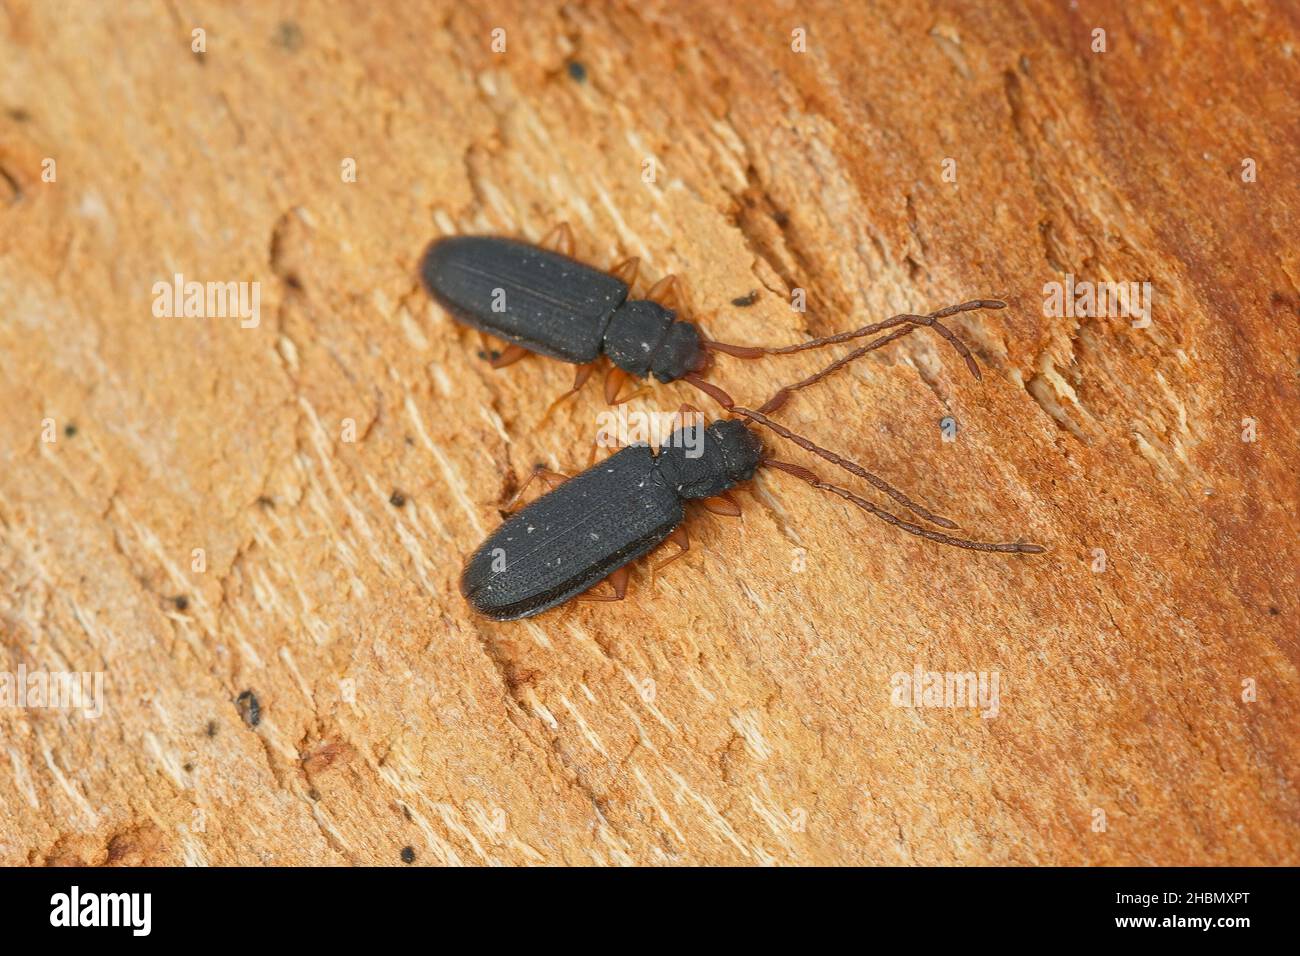 Closeup on two silvanid flat bark beetles, Uleiota planata, hiding under a fallen log in the field Stock Photo